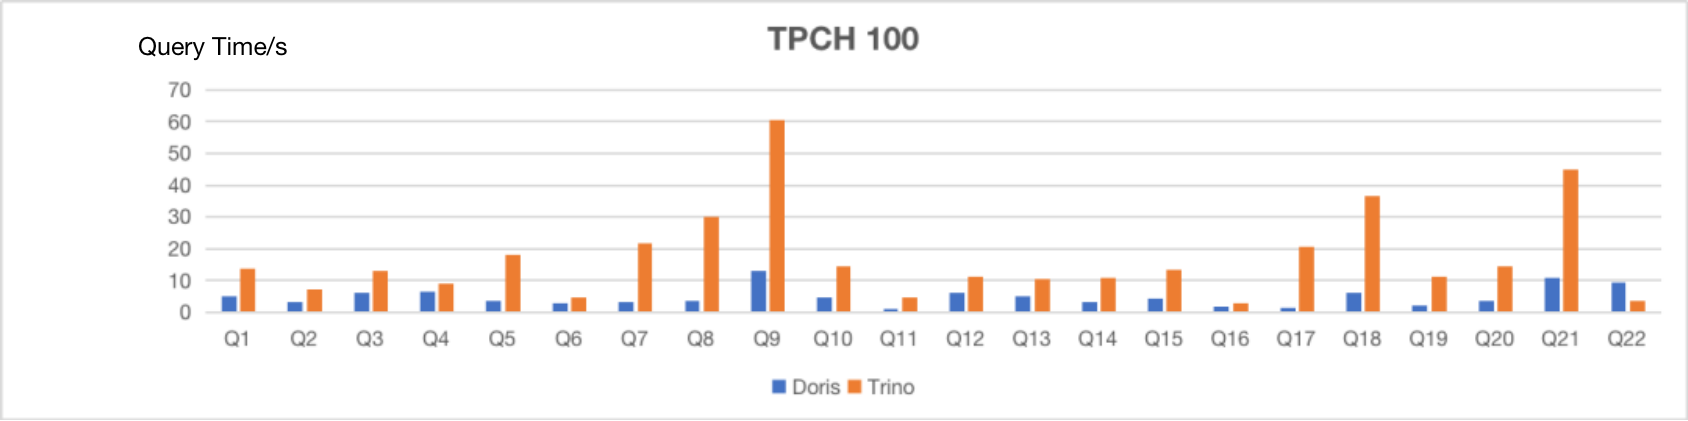 Apache-Doris-VS-Trino-Presto-TPCH